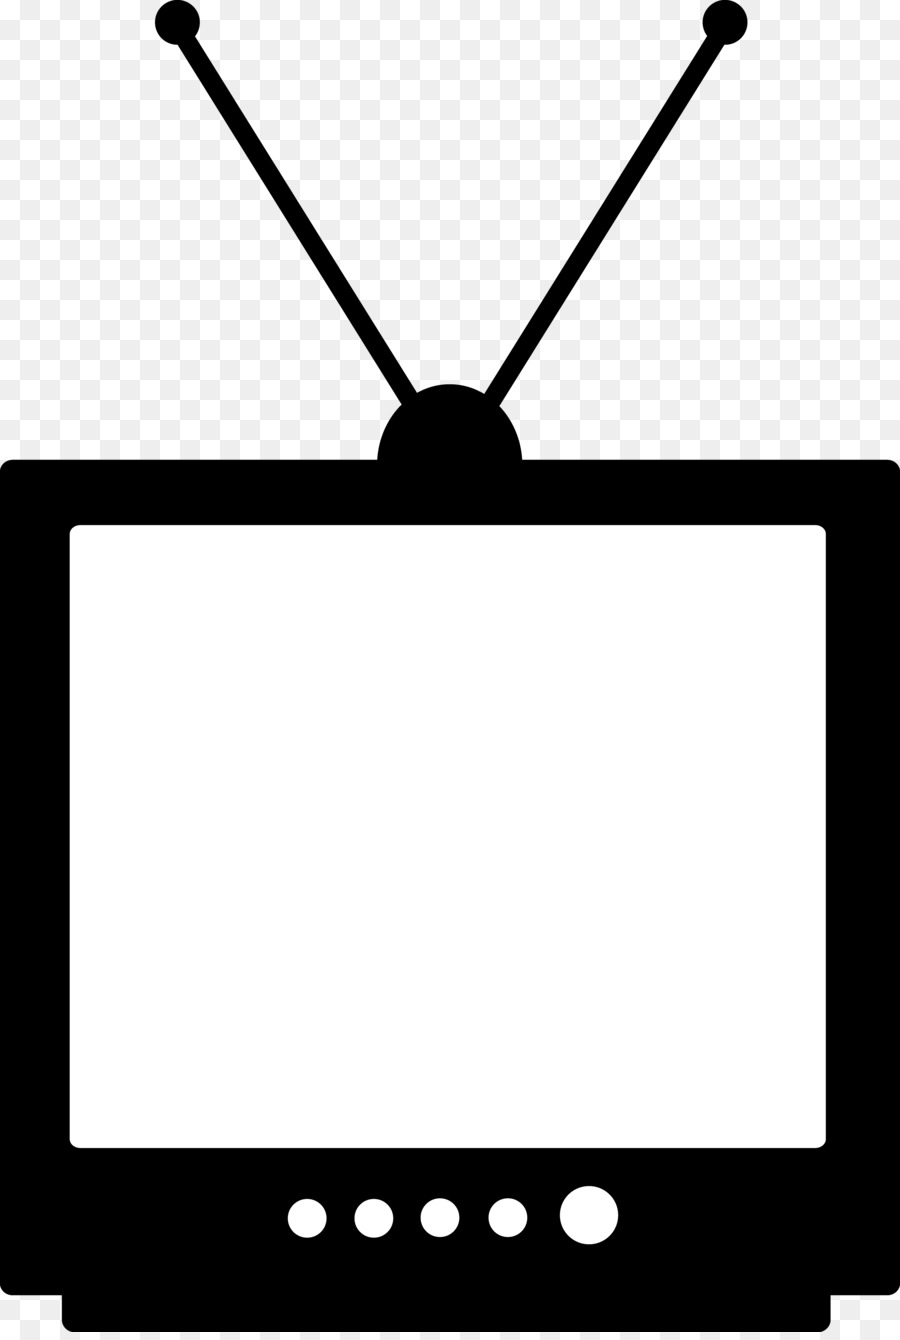 Television Drawing Clip art - TV Cliparts png download - 3513*5199 - Free Transparent Television png Download.